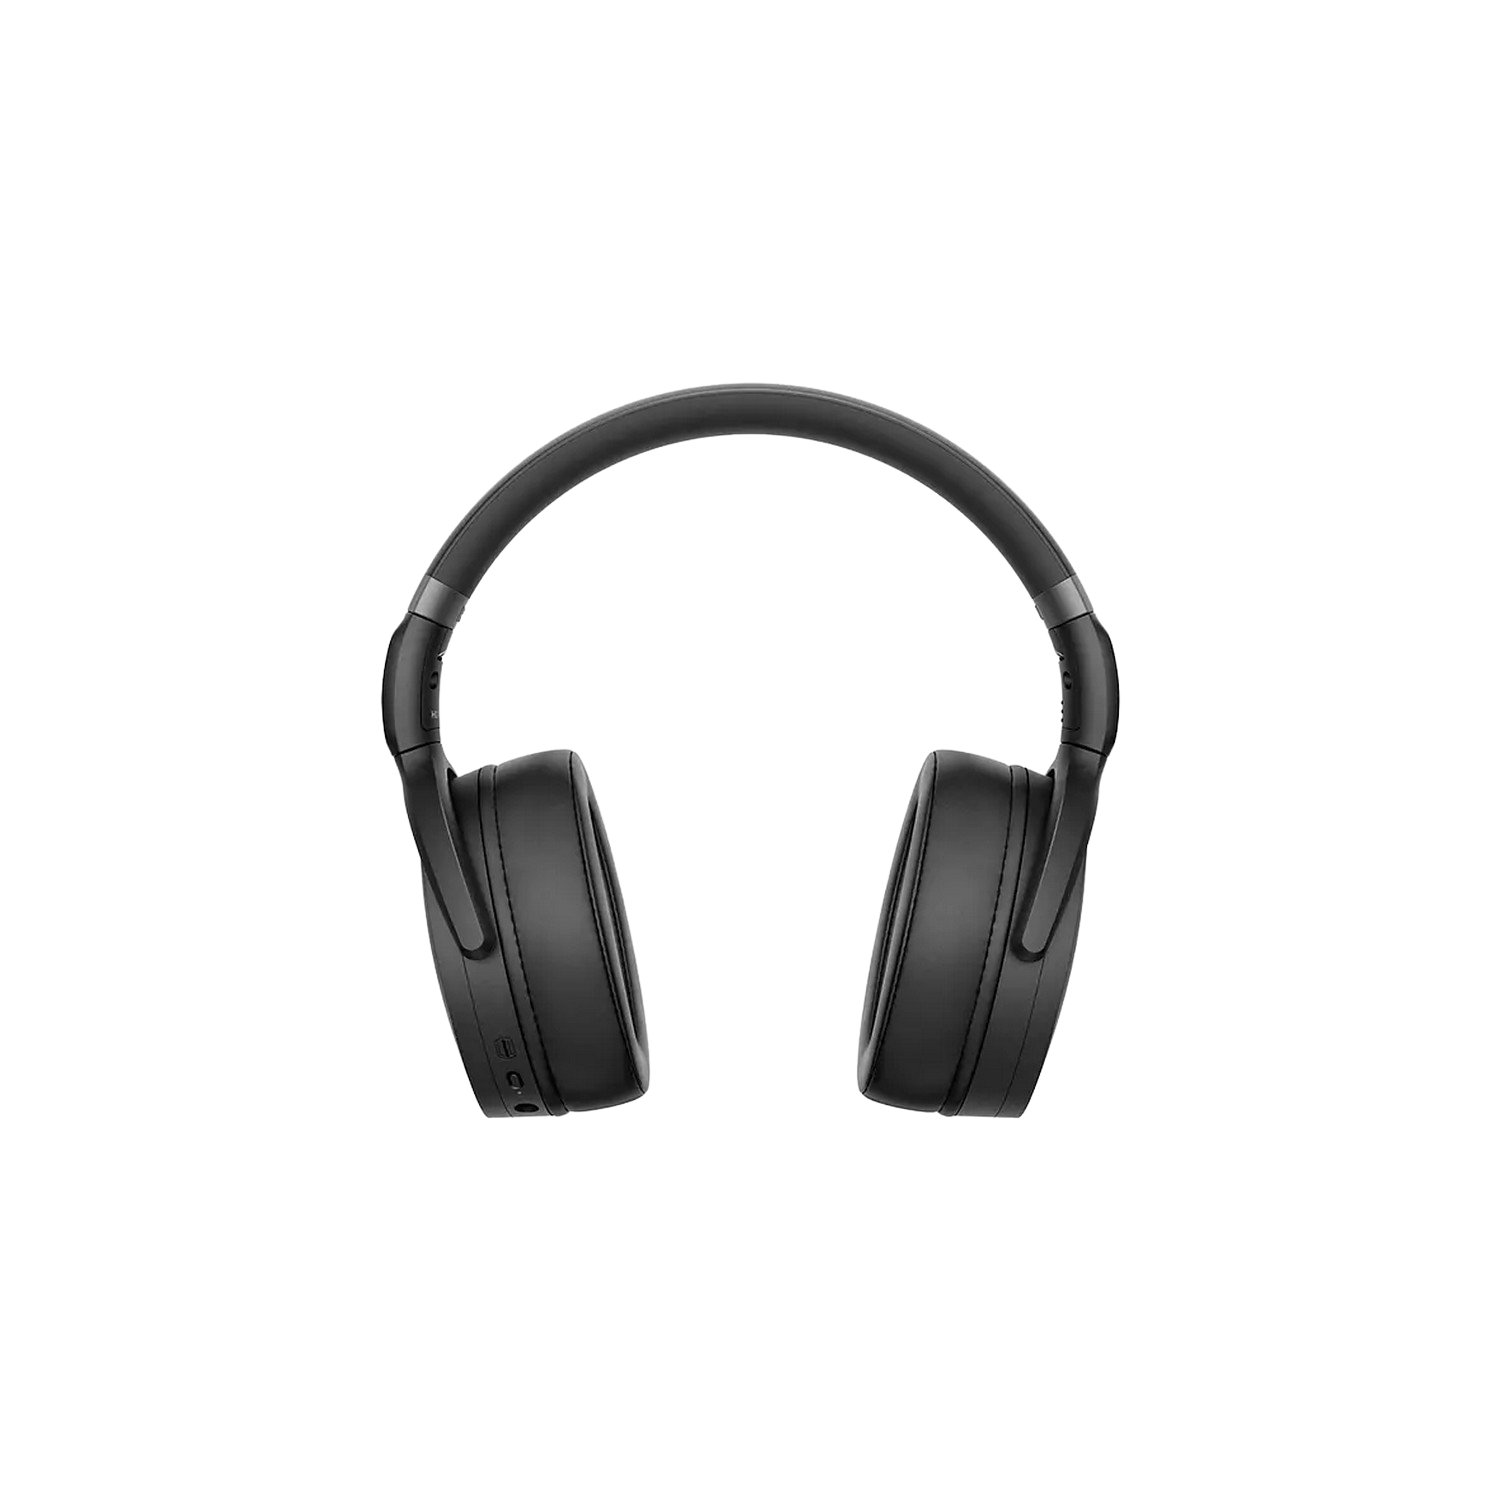 Sennheiser Hd 450 black auricular wireless con de ruido activa circumaural blanco 450bt bluetooth negros btnc ear hd450 diadema noise cancelling sk508386 y casco 5.0 30h